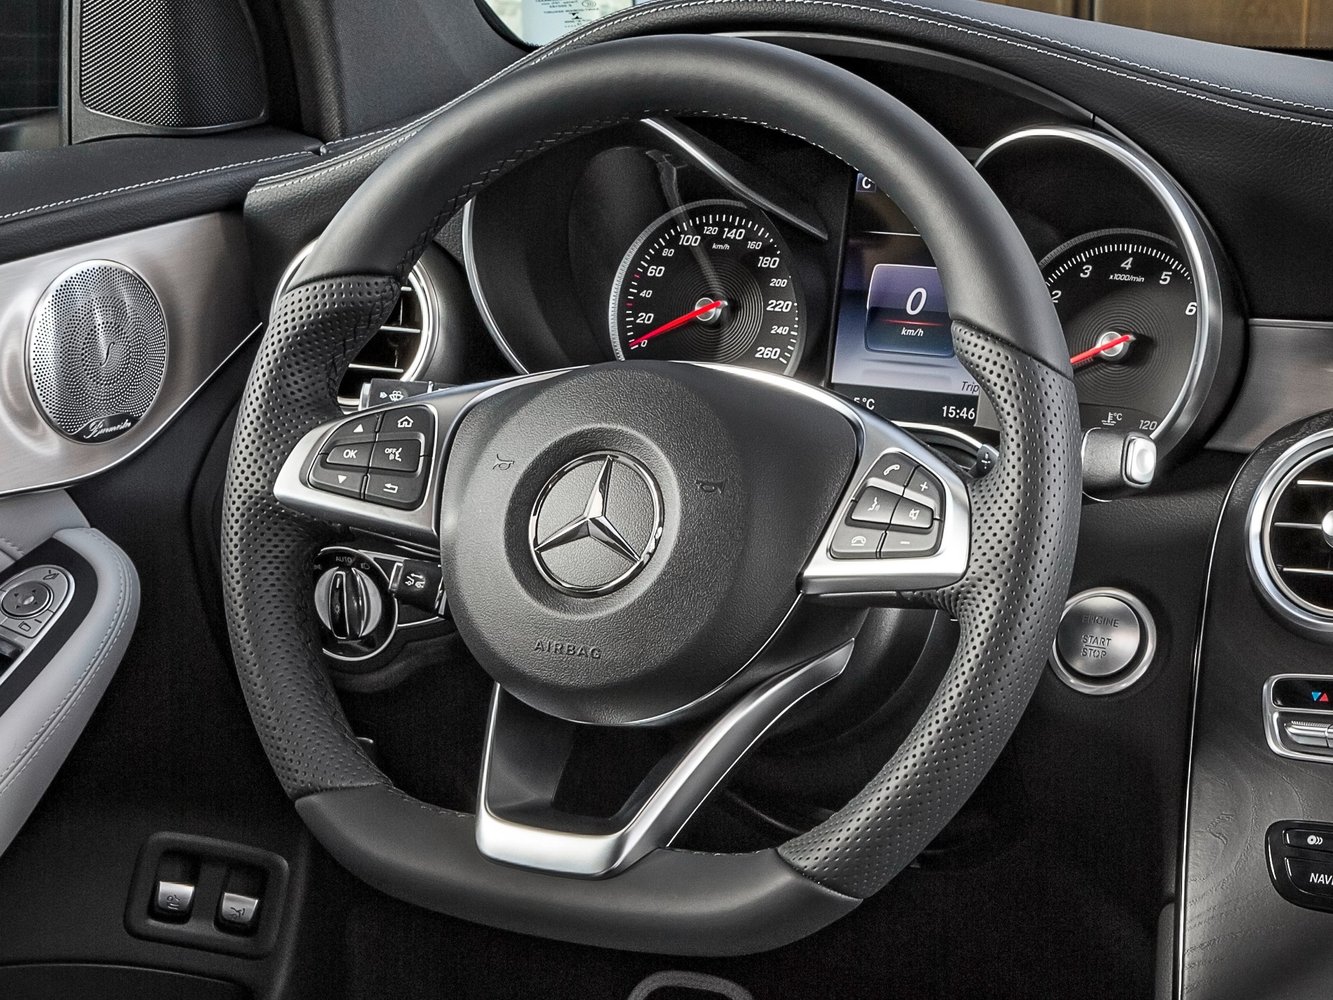 кроссовер Mercedes-Benz GLC Coupe 2016г выпуска модификация 2.0 AT (211 л.с.) 4×4